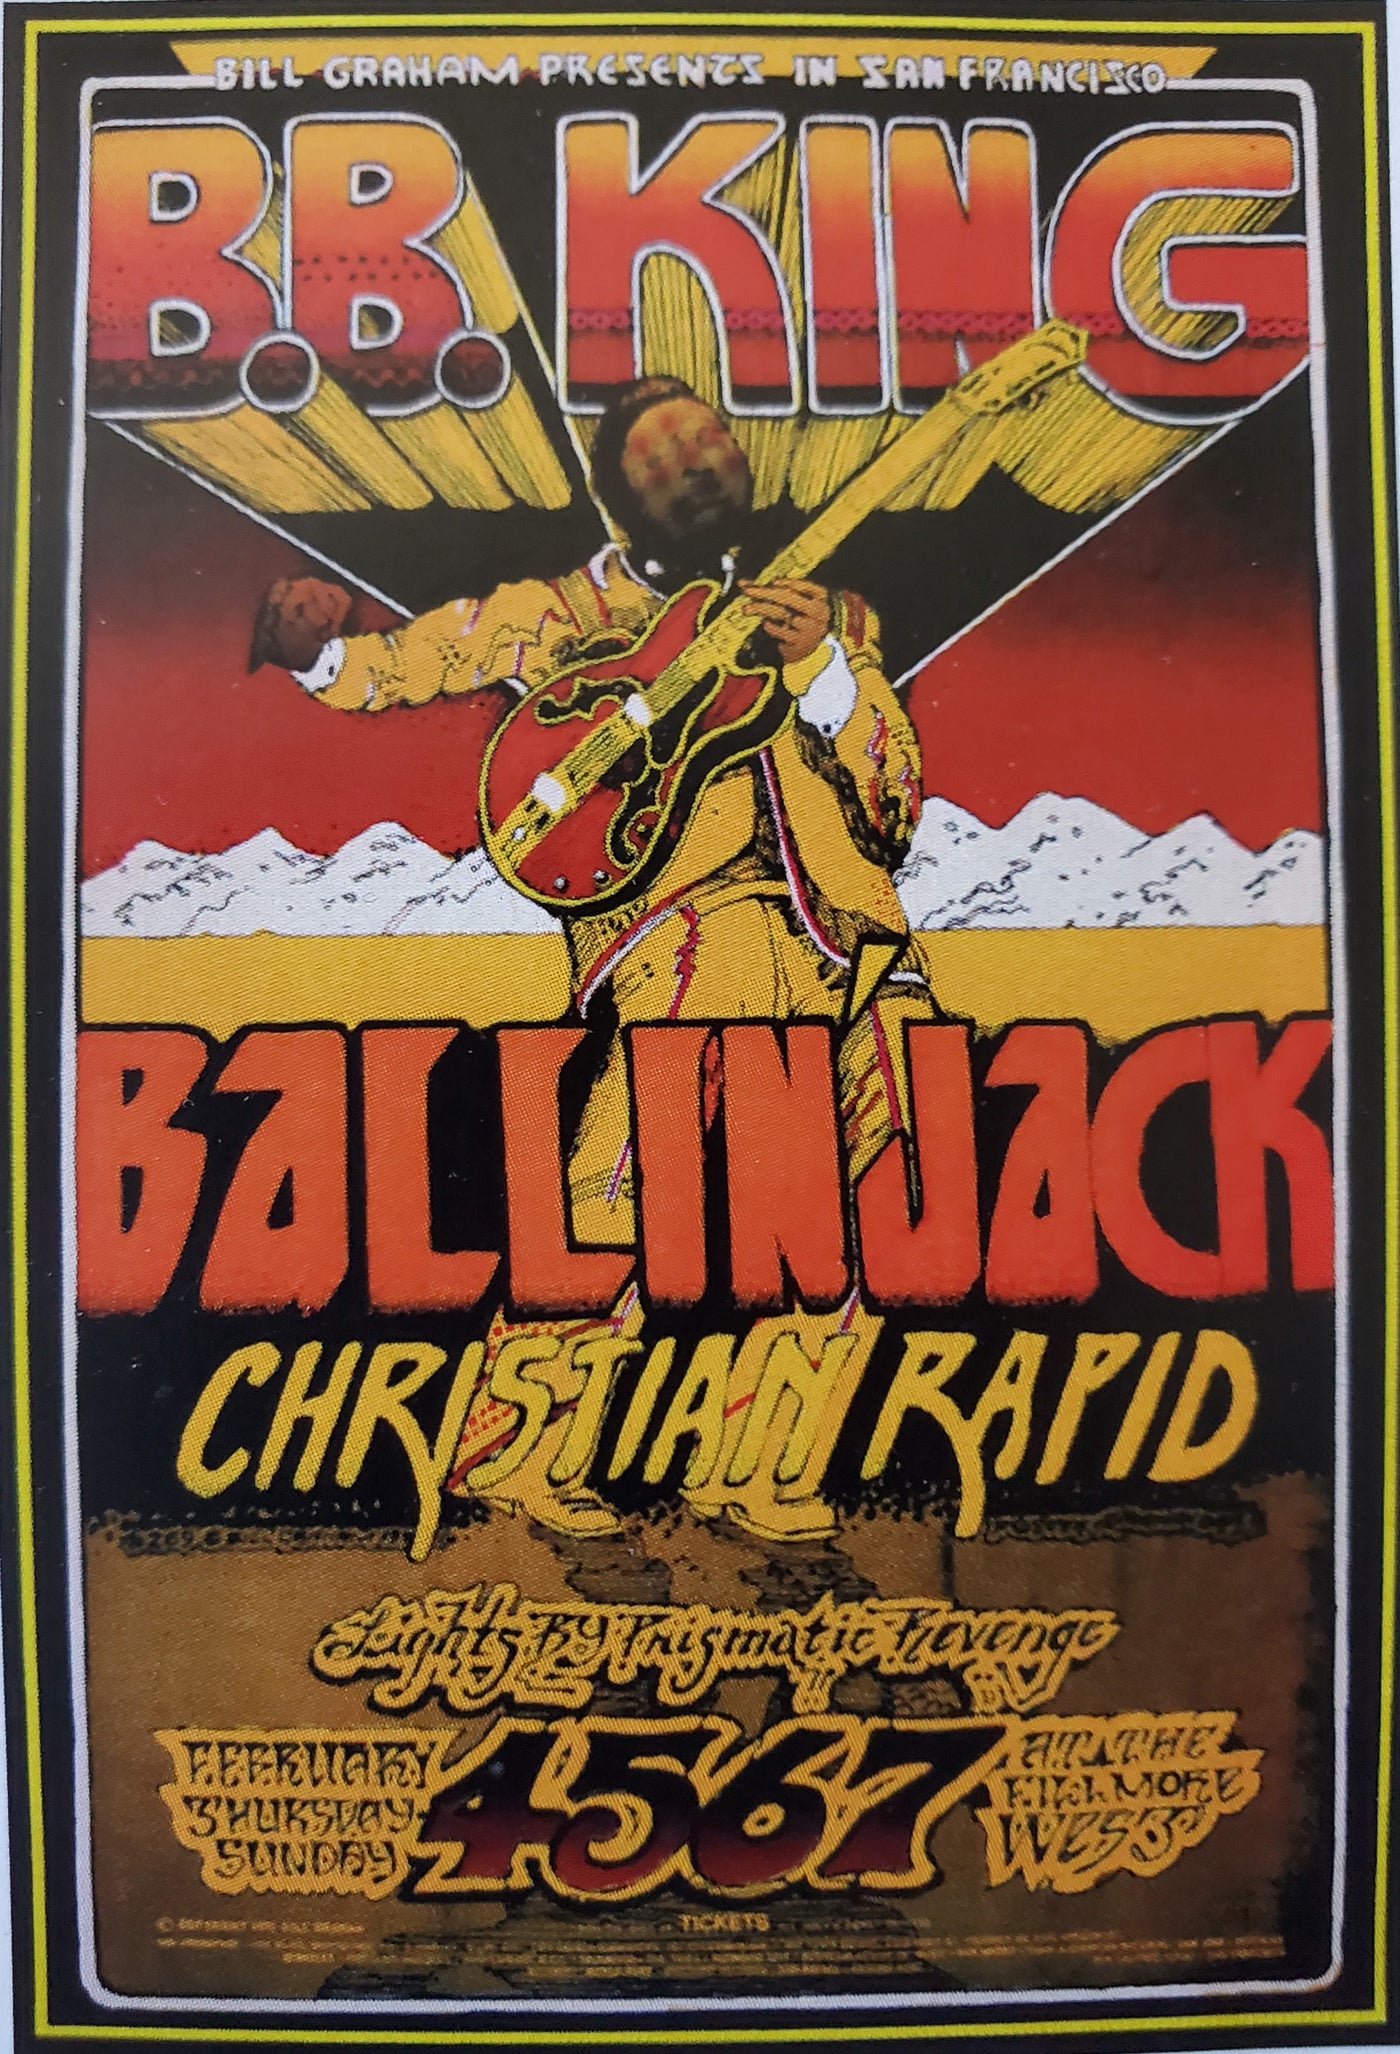 Poster 280 B.B. King/Ball in Jack/Christian Rapid